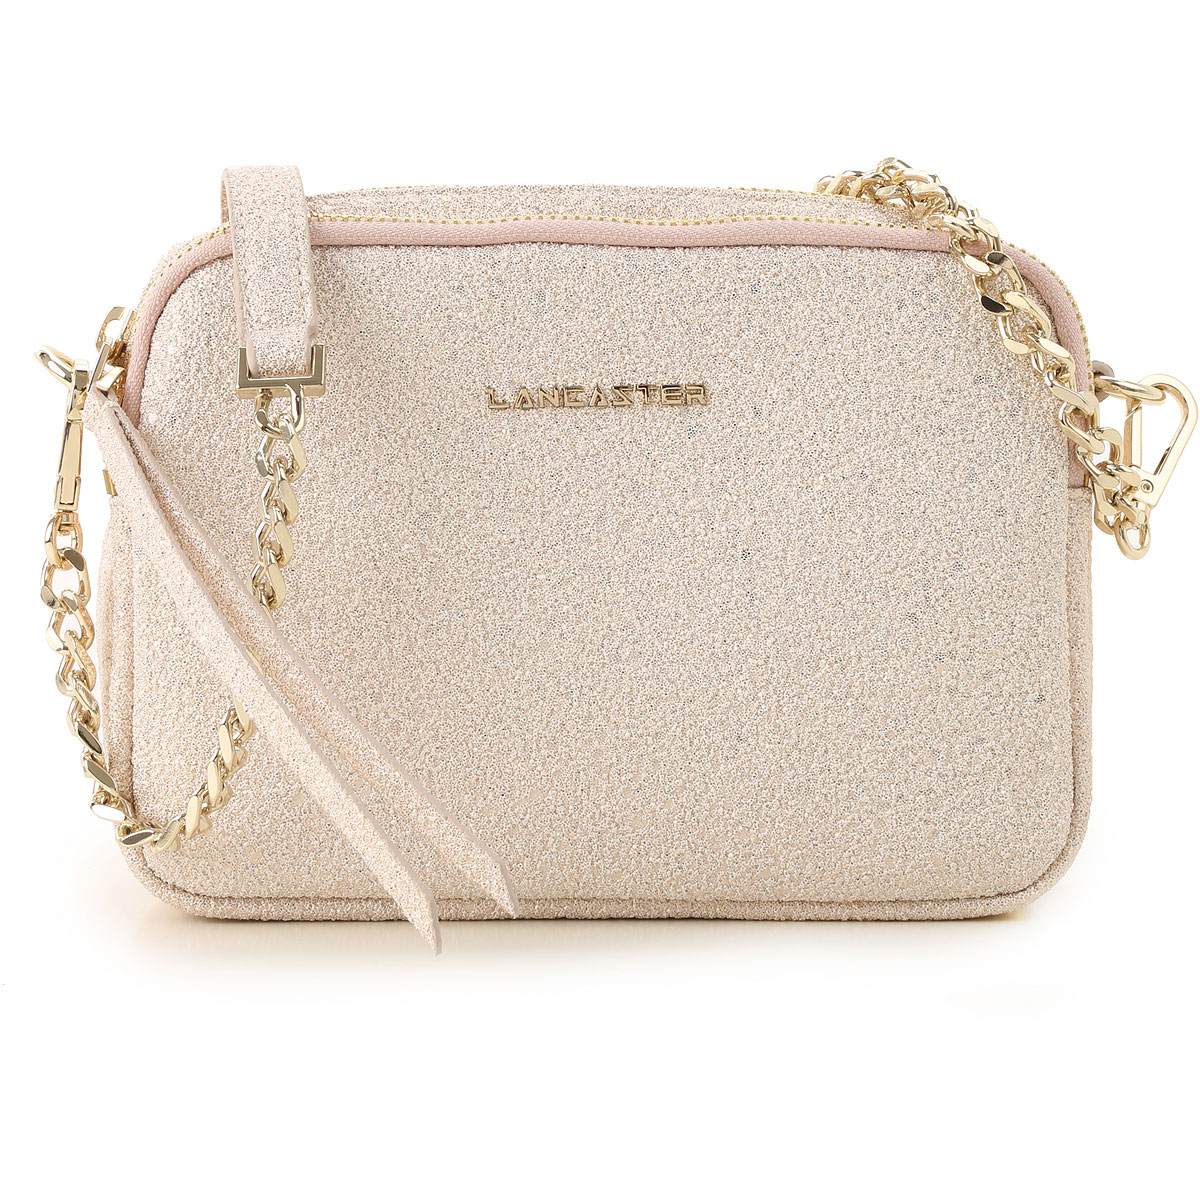 Handbags Lancaster, Style code: 51923-ororosa-